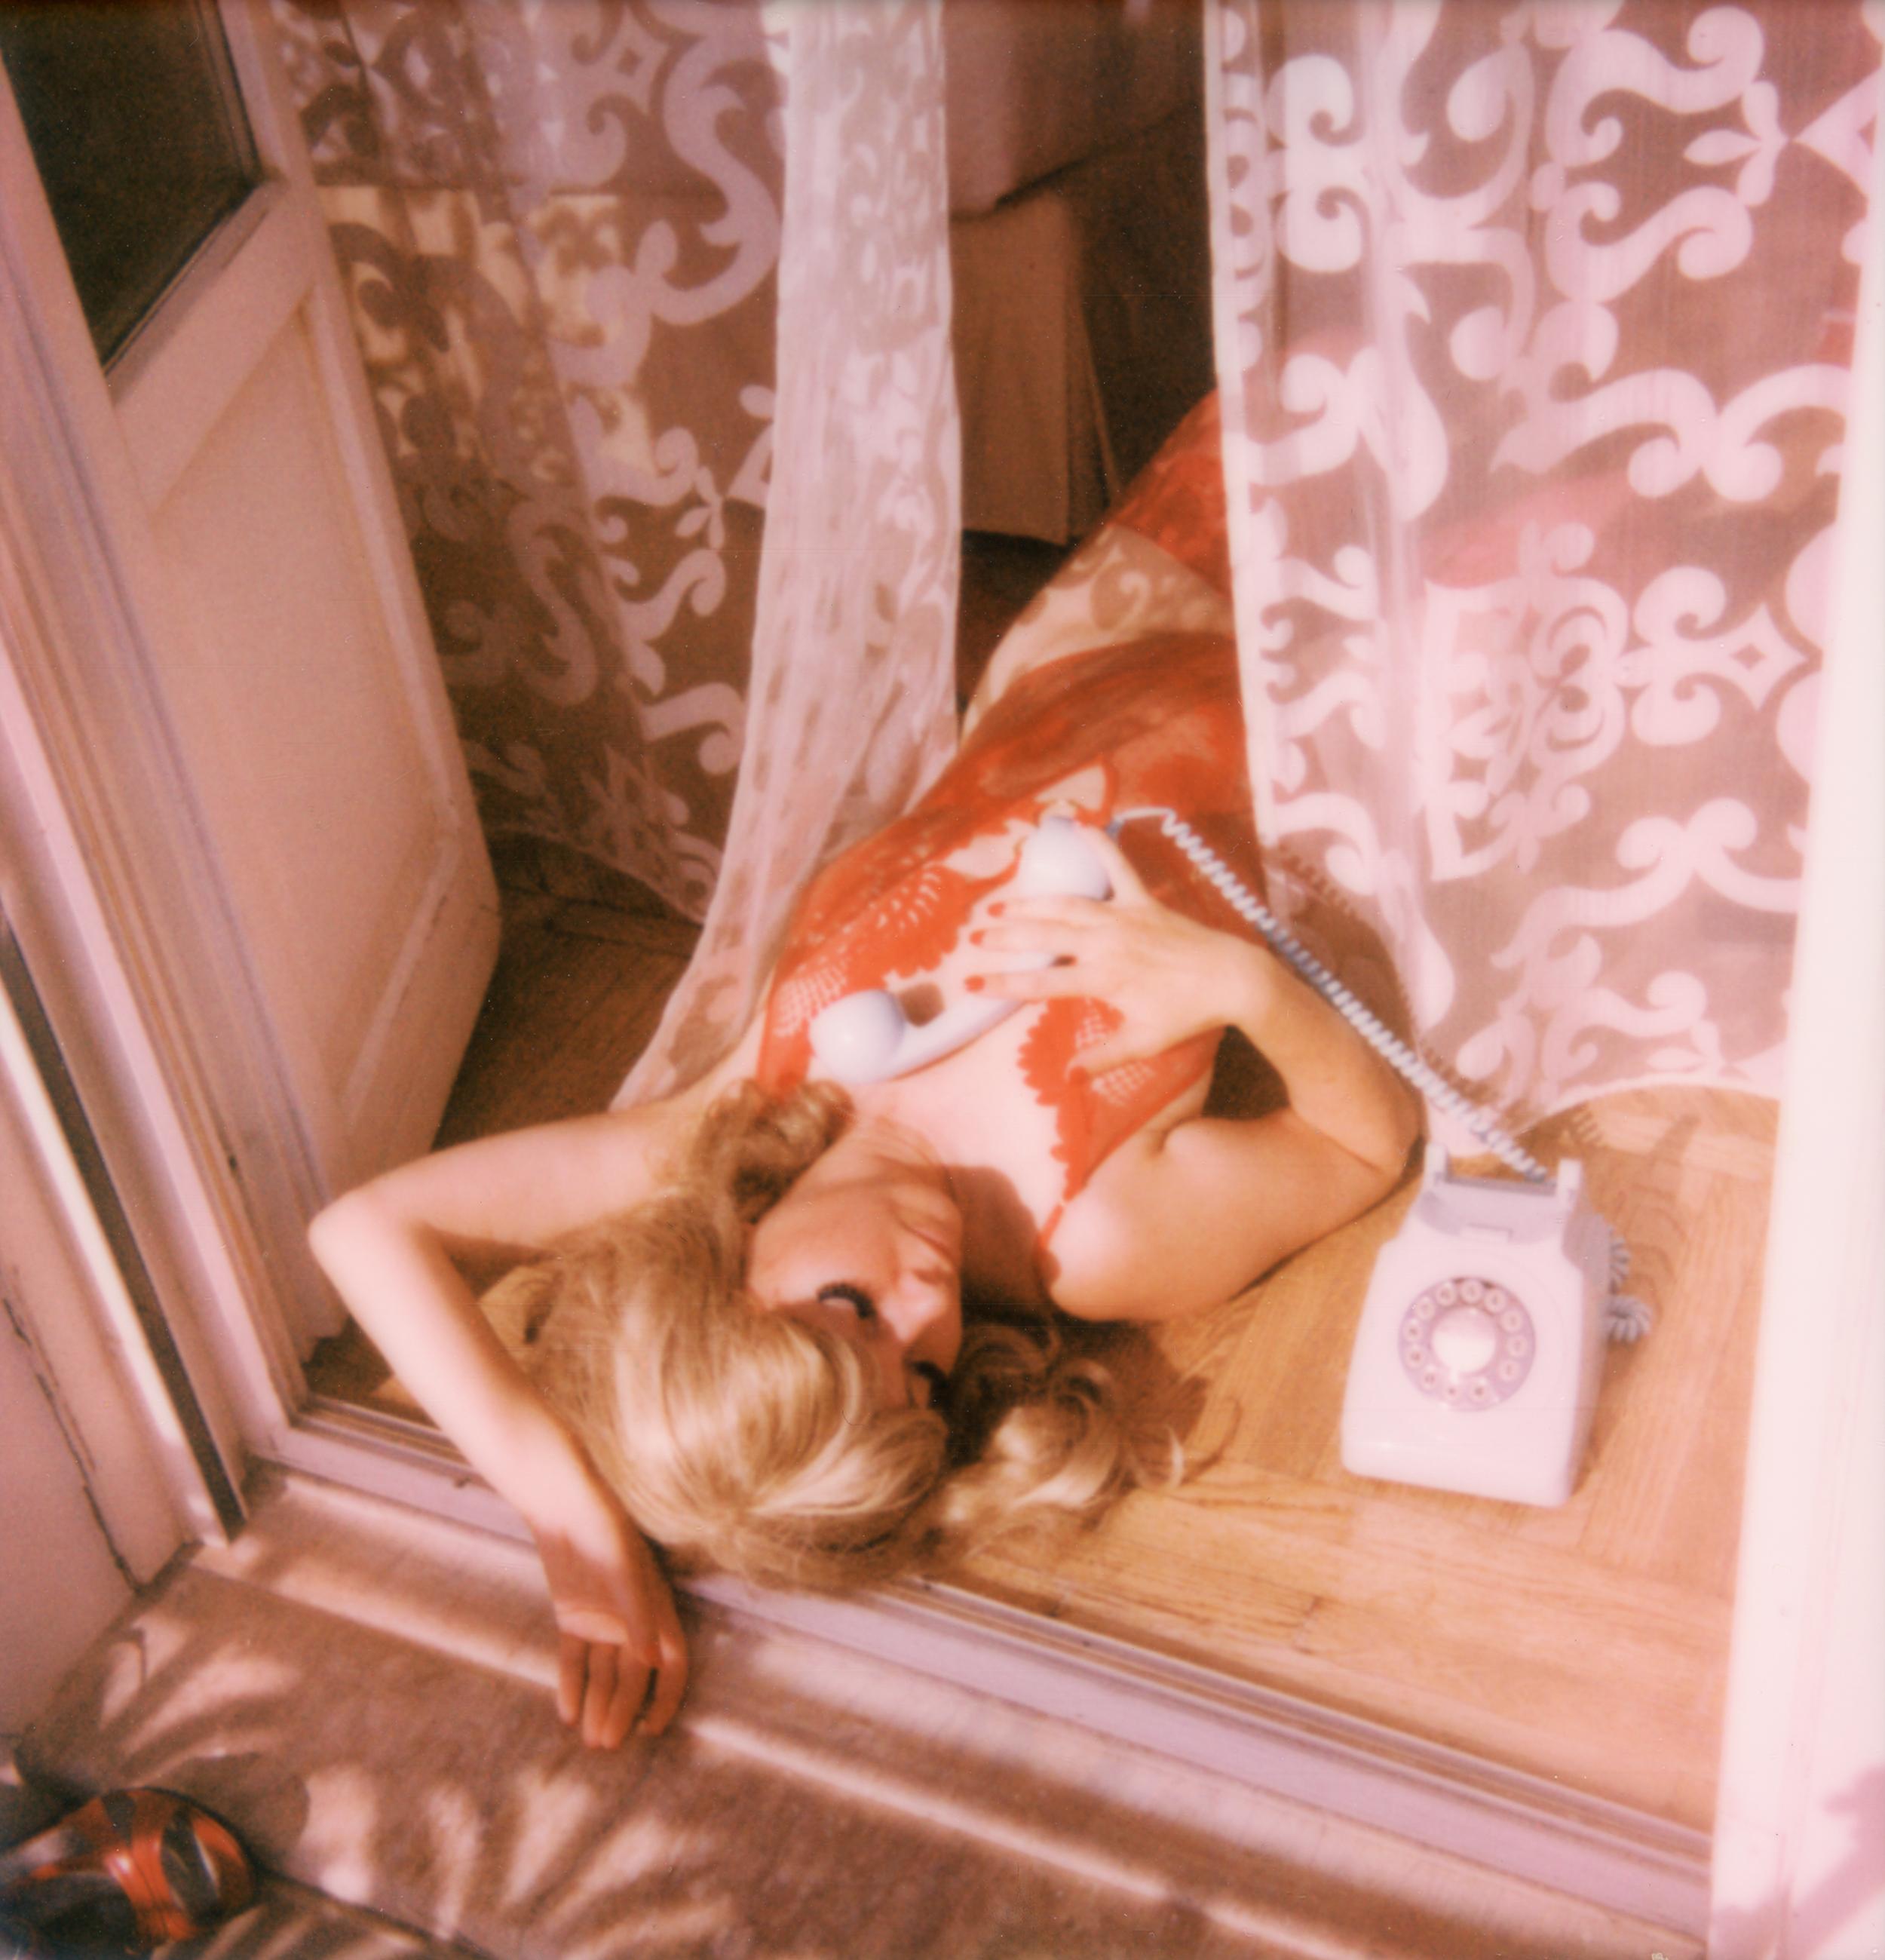 Morning Slumber - Zeitgenössisch, Polaroid, Frau, 21. Jahrhundert,